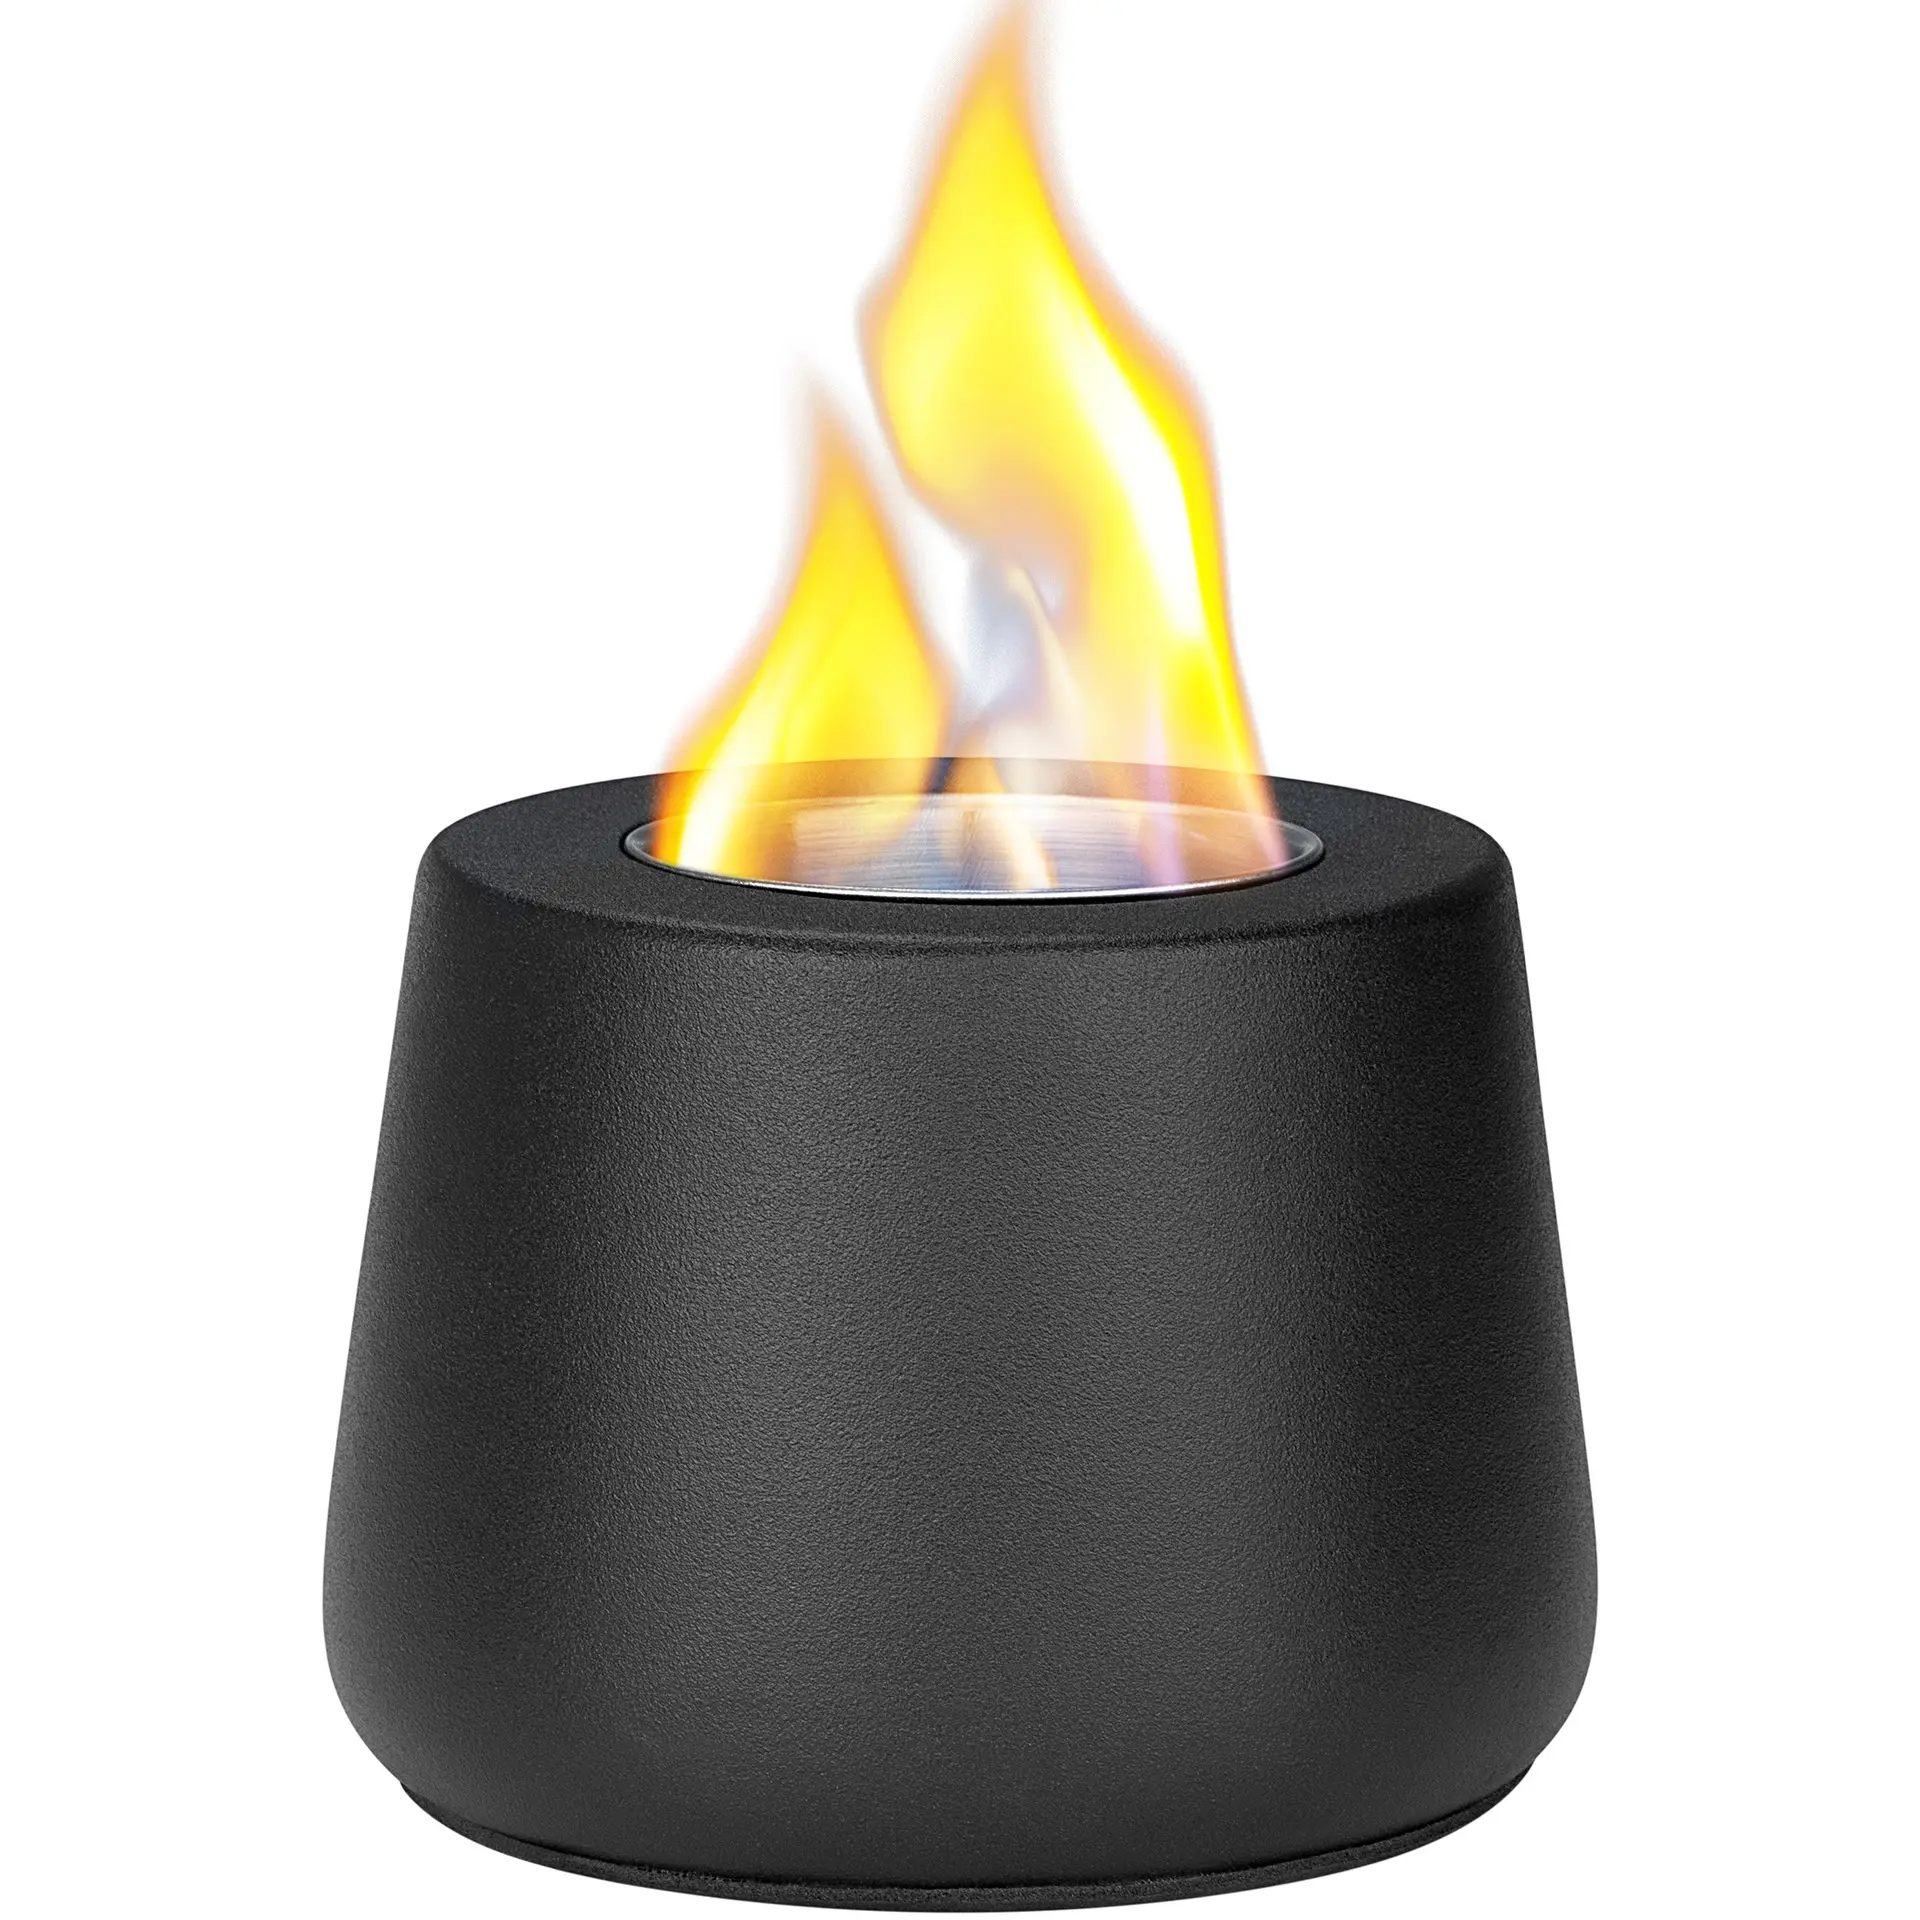 Keramik Tabletop kecil portabel mangkuk lubang api Mini alkohol perapian etanol pembuat Smores dalam ruangan luar ruangan